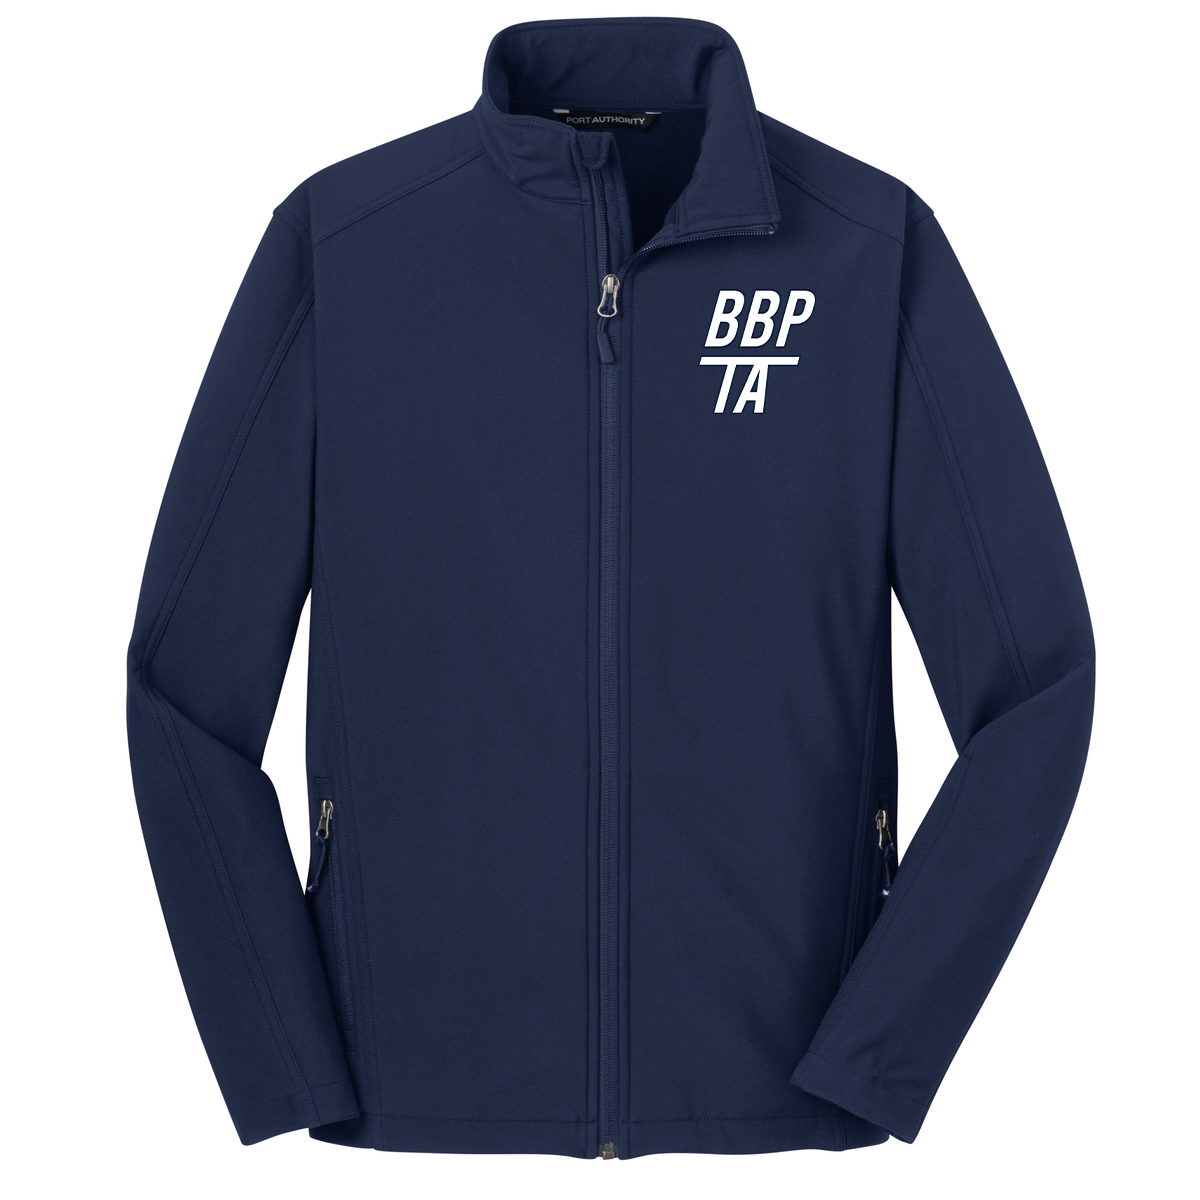 BBP TA Soft Shell Jacket